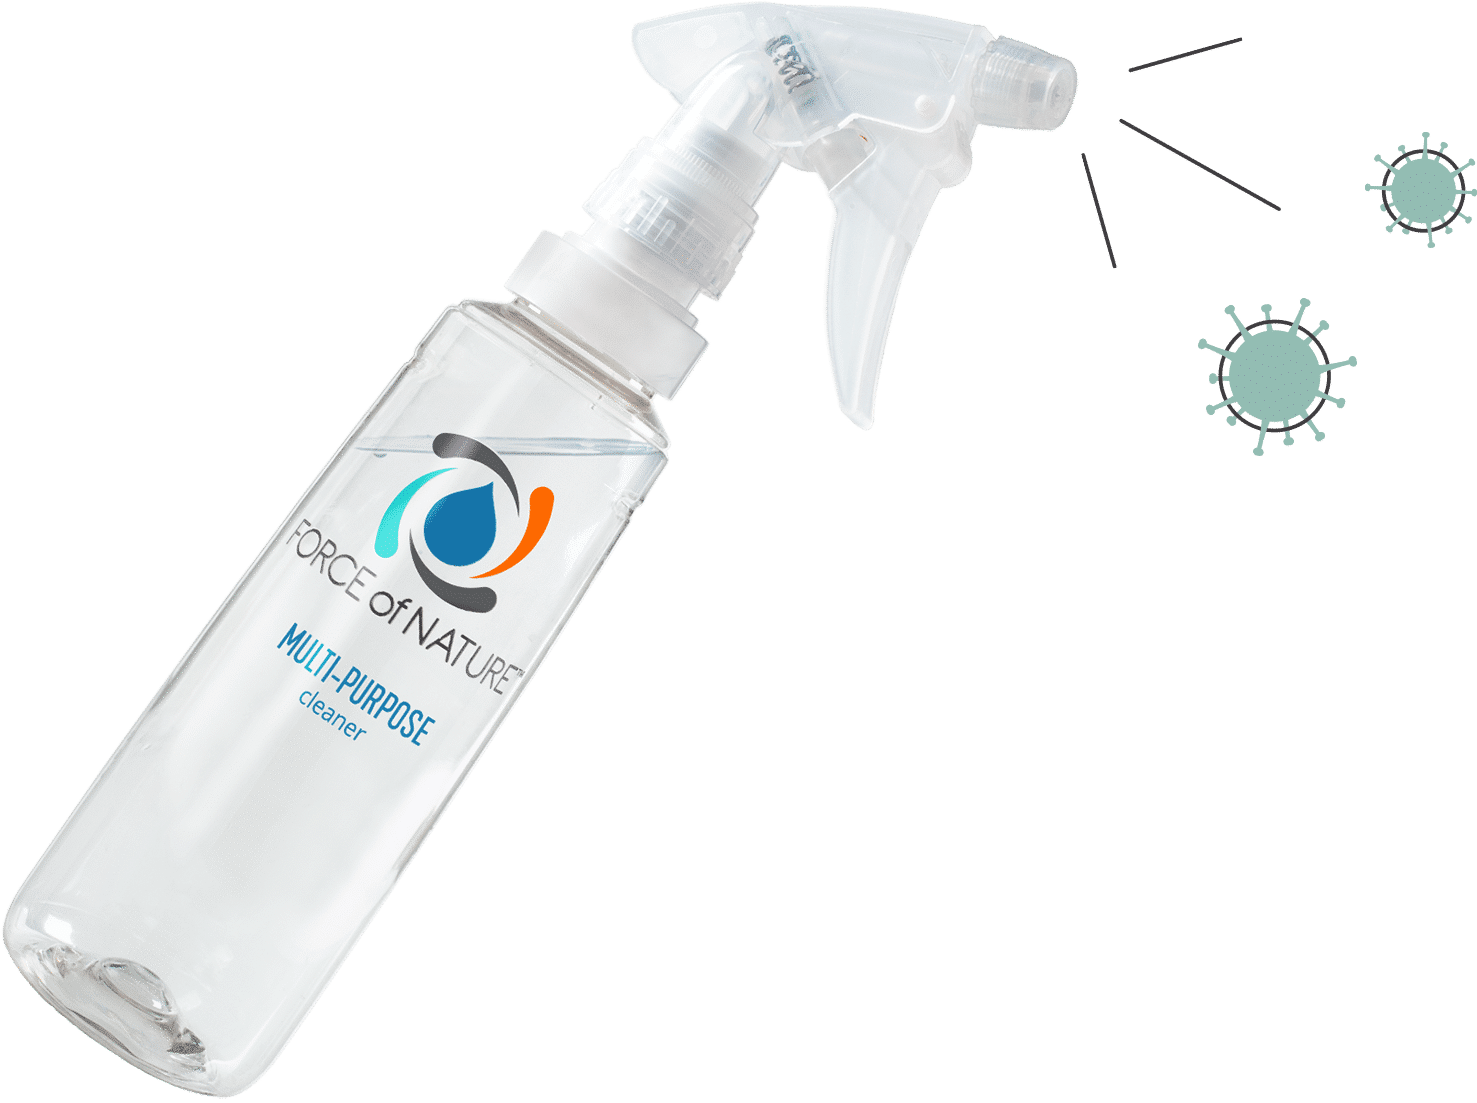 Natural Cleaner + EPA-Registered Disinfectant